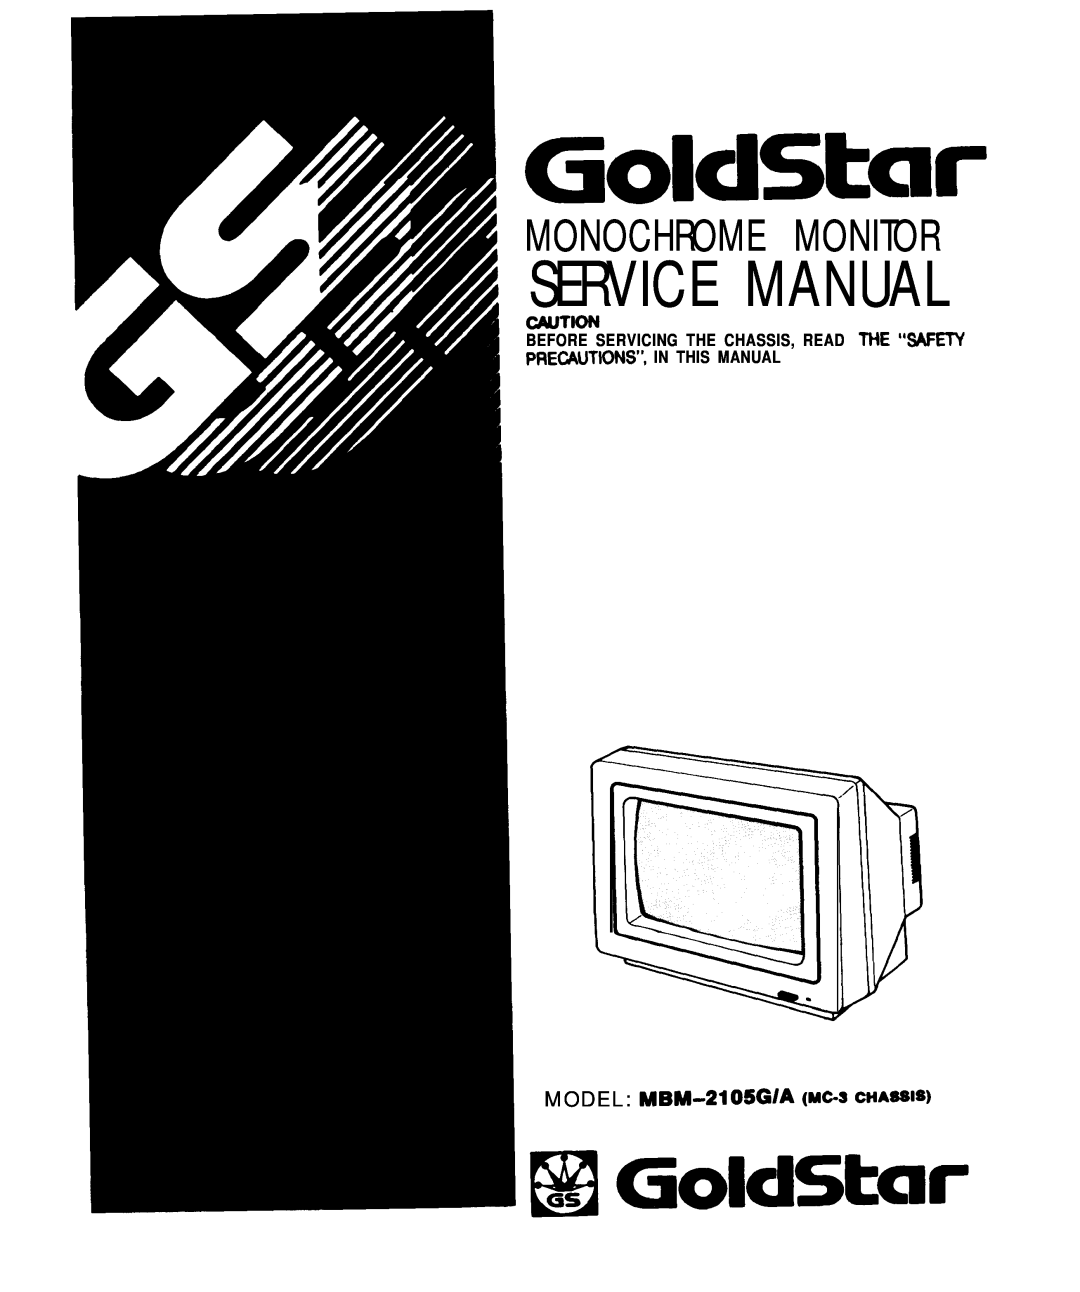 Goldstar service manual MODEL MBM-2105GIA MC-3 CHA=W, GolclStar, B GoldStar, Monochrome Monitor 